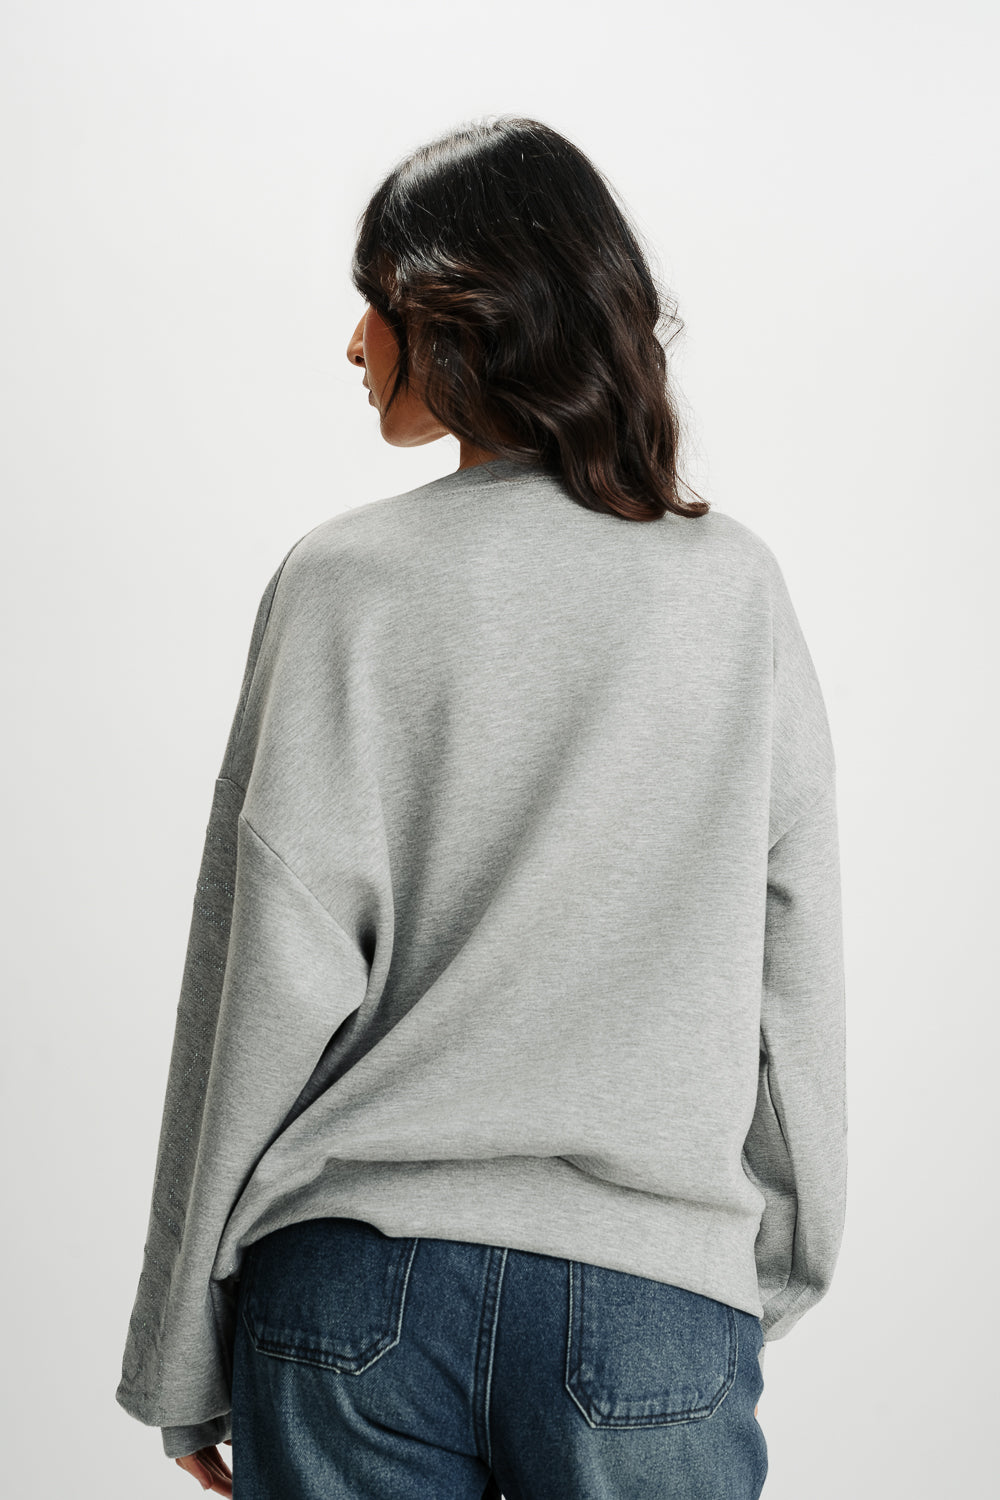 Slate Grey Pullover